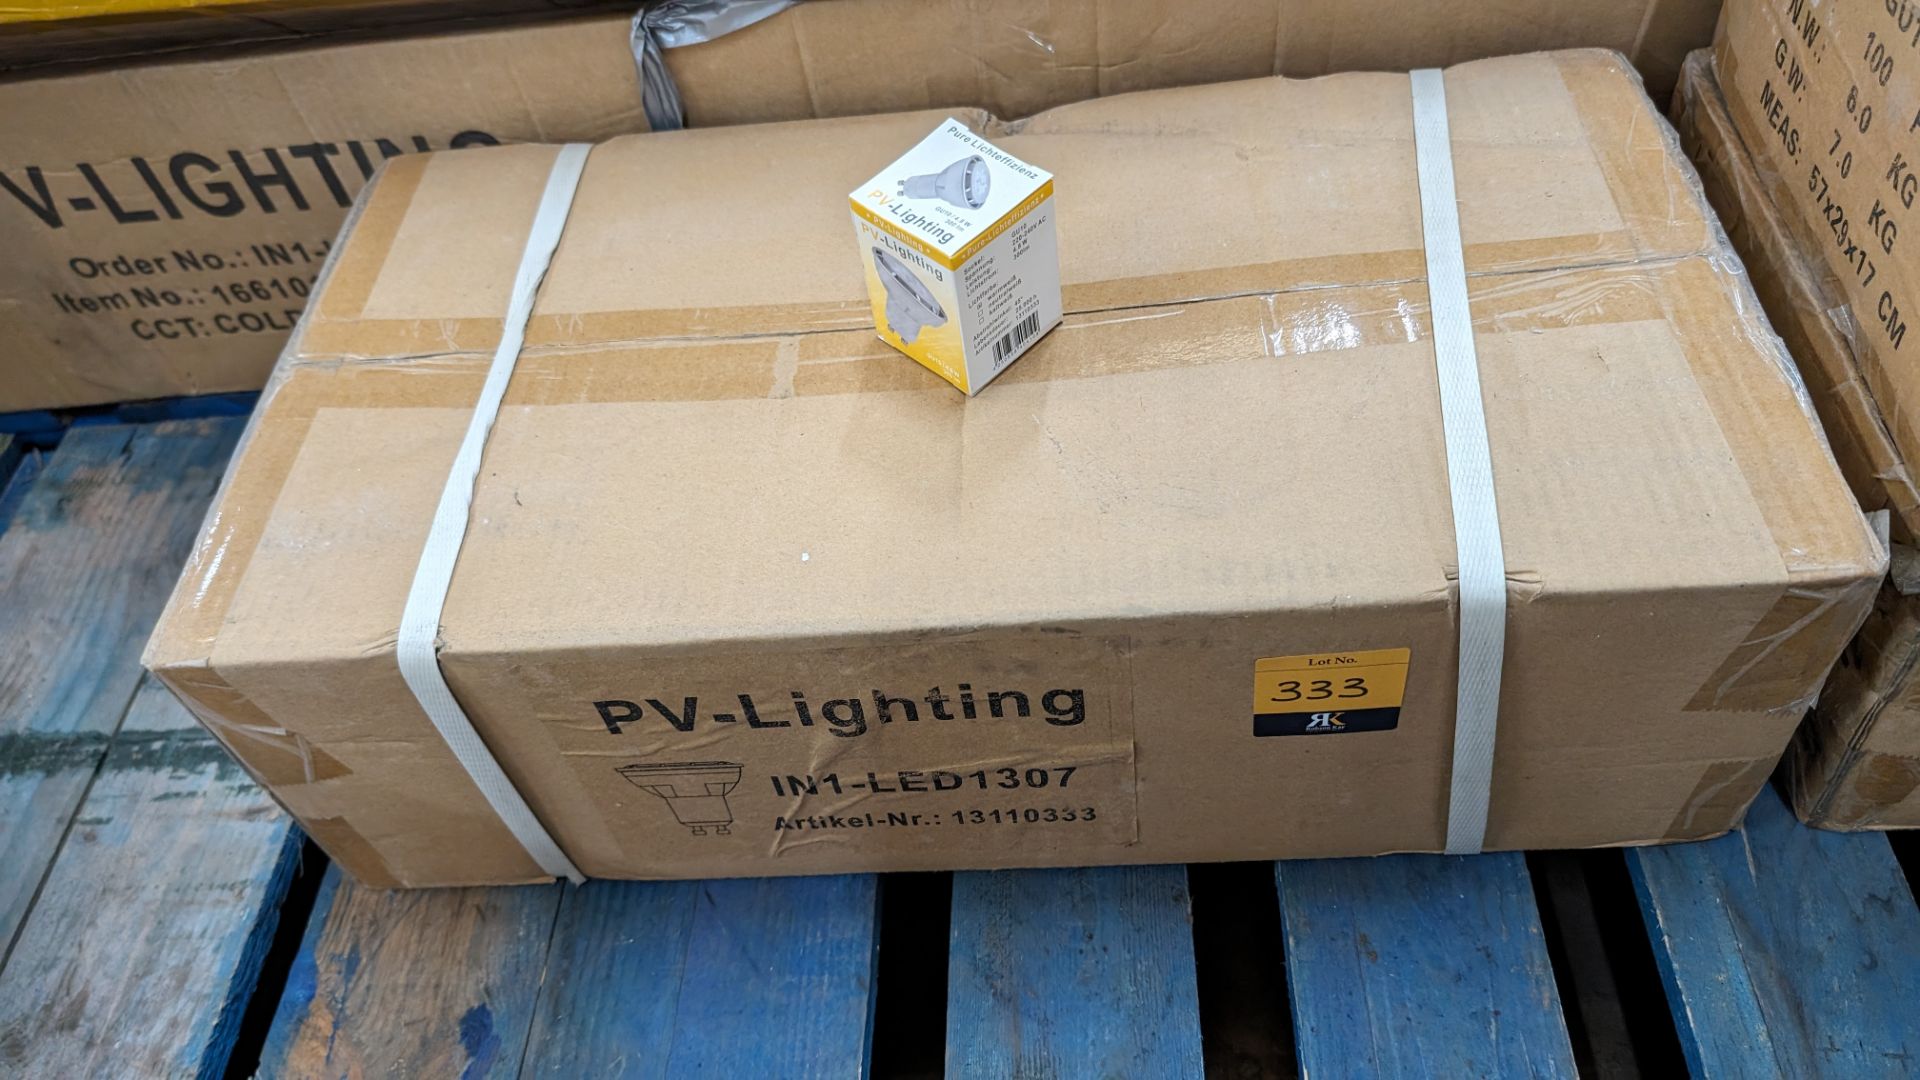 100 off GU10 LED bulbs, 4.8w, 300 lumens, warm white, 220-240v, 25000 hours - 1 carton